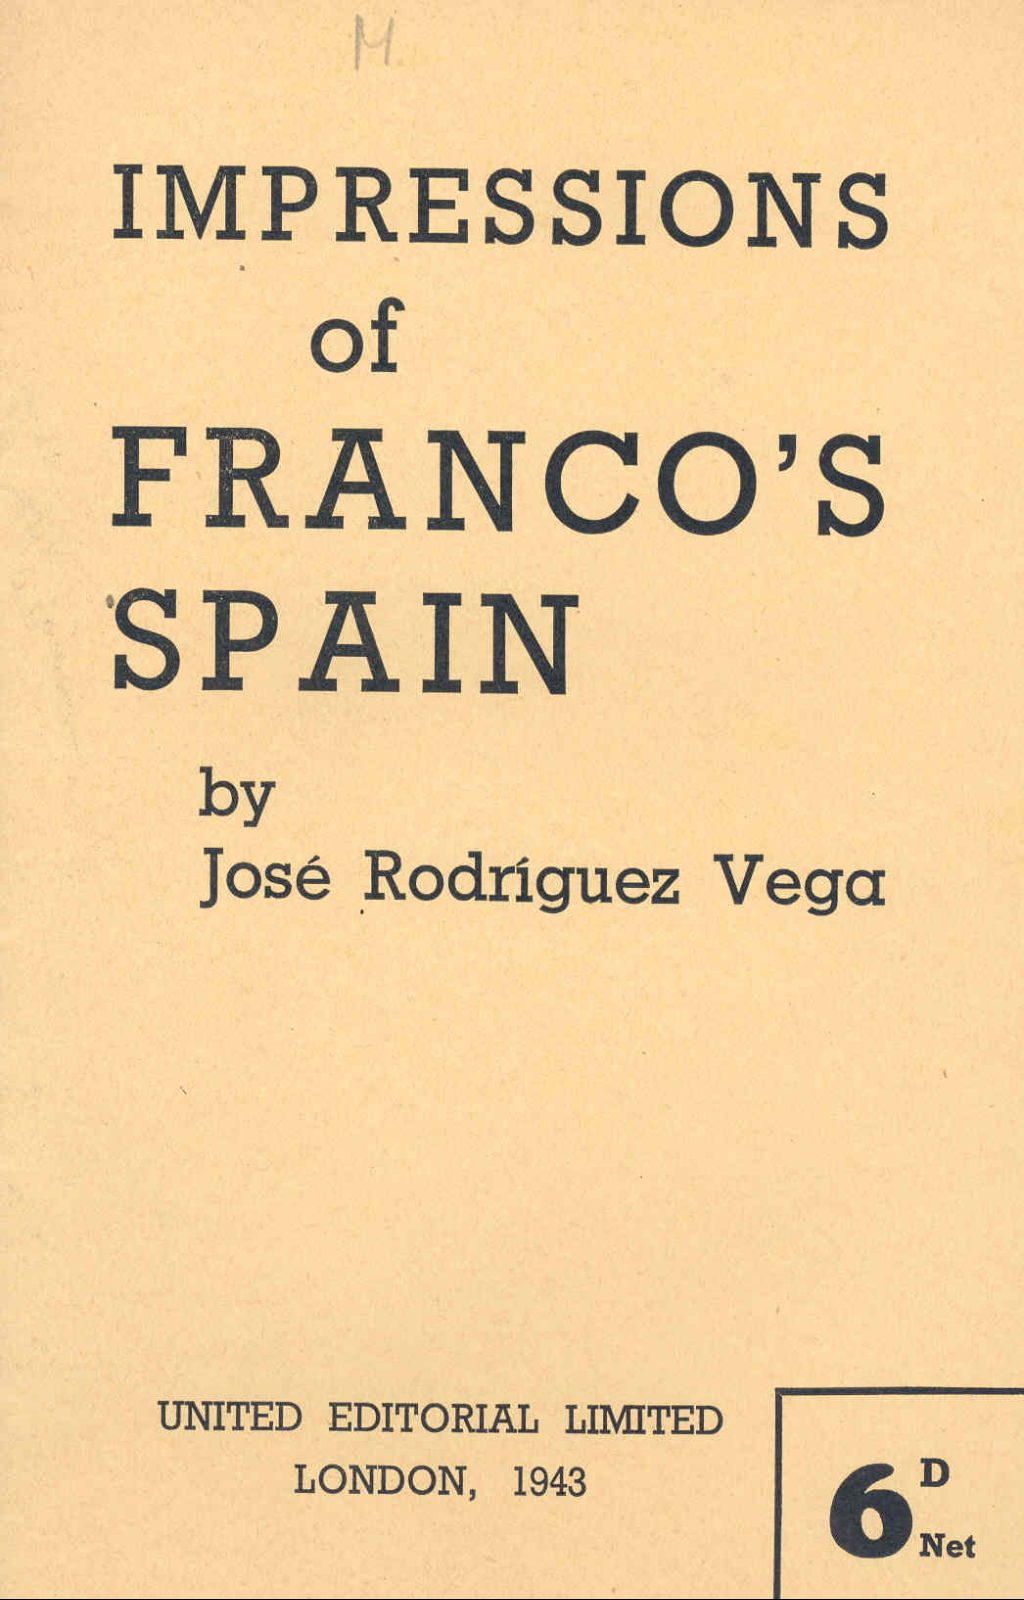 Pamphlet, 'Impressions of Franco's Spain' by José Rodriguez Vega, 1943